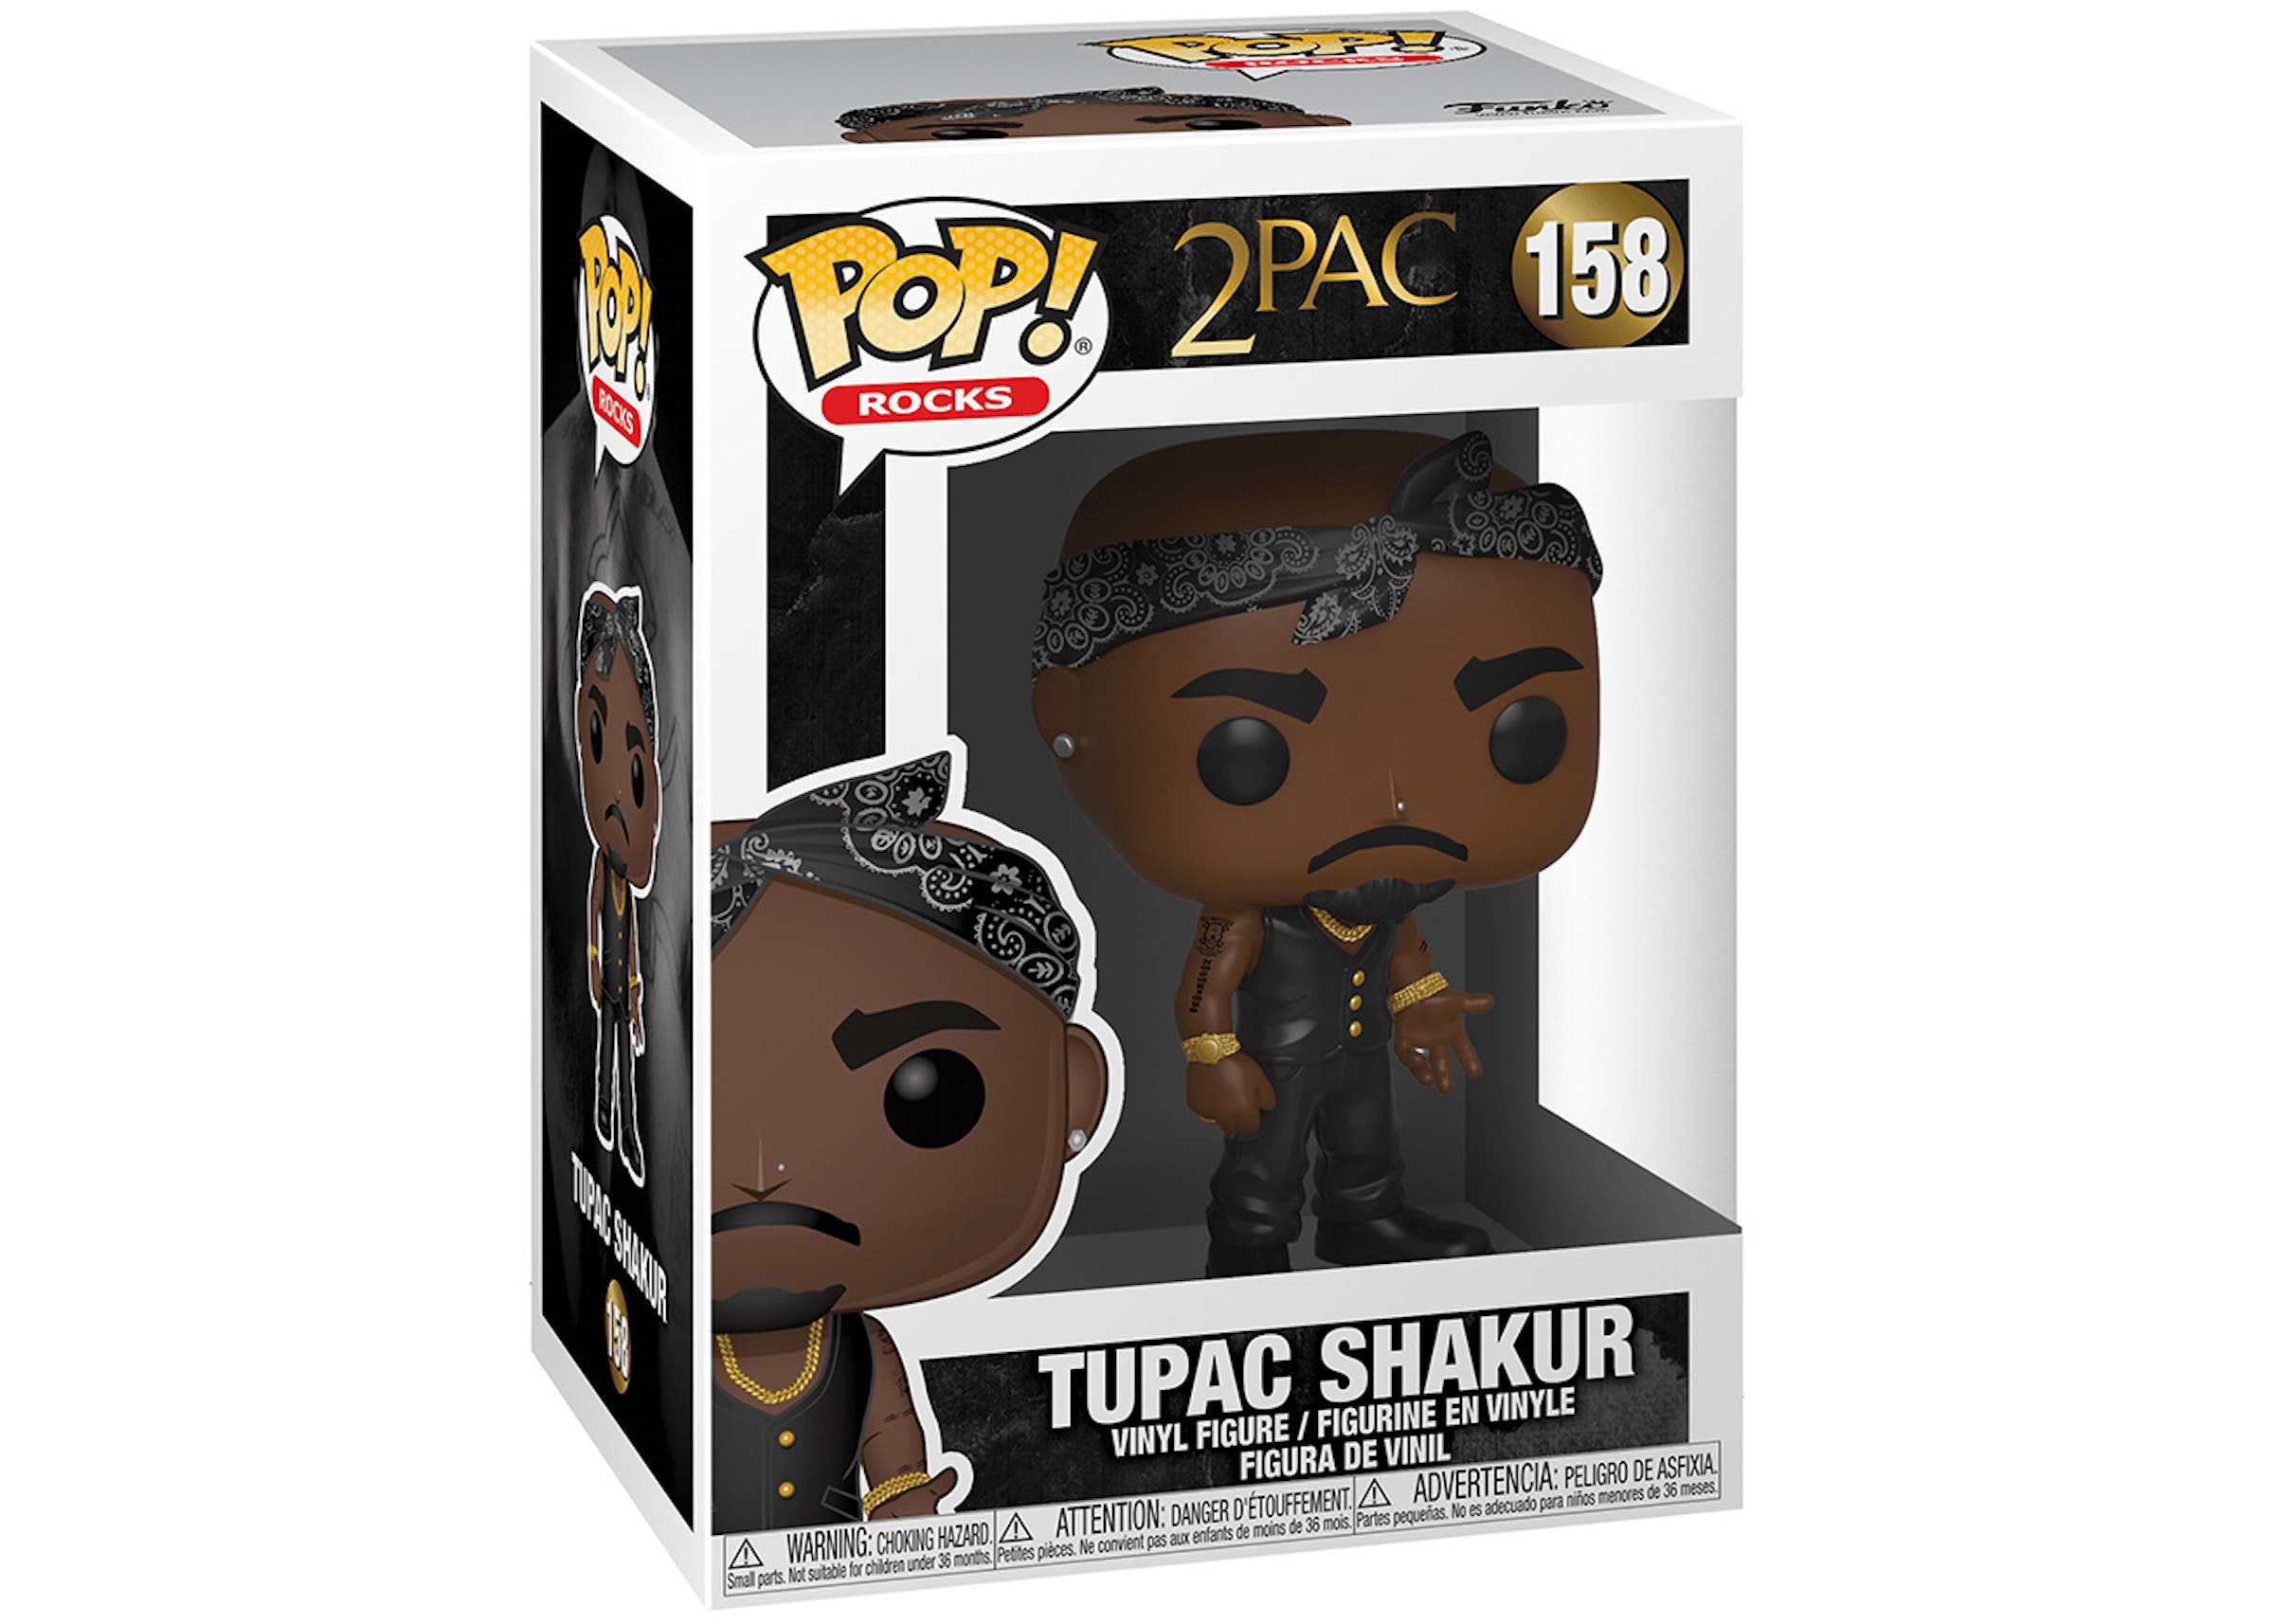 Arbejdsløs Gør livet Gå op Funko Pop! Rocks 2Pac Tupac Shakur Figure #158 - US